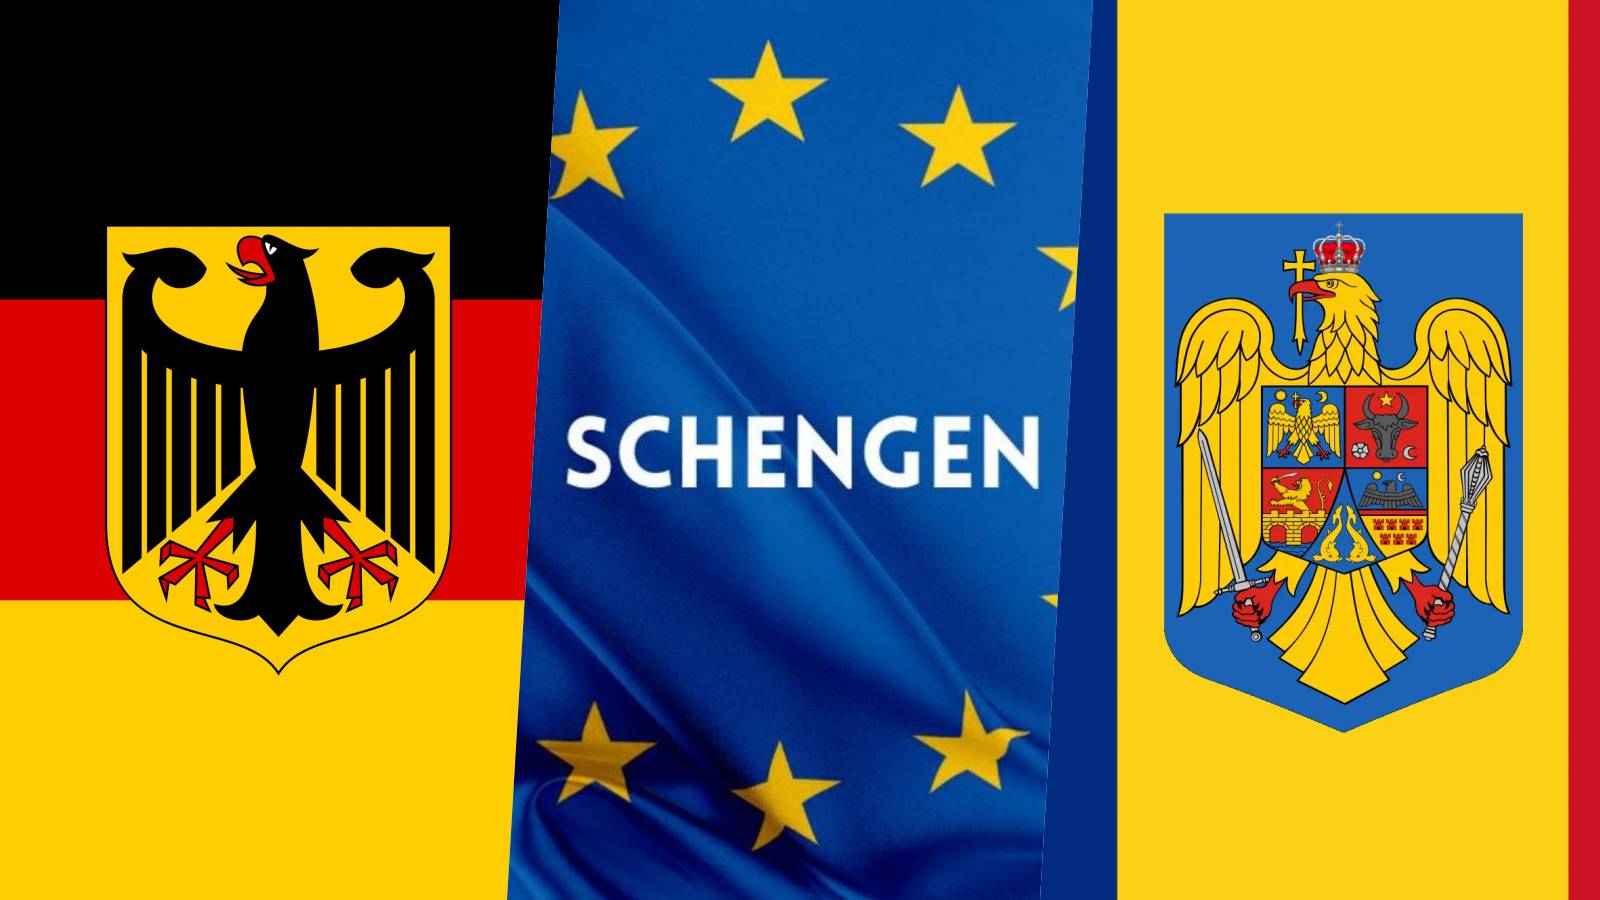 Germania Promisiunea Oficiala ULTIM MOMENT Finalizarea Aderarii Romaniei Schengen